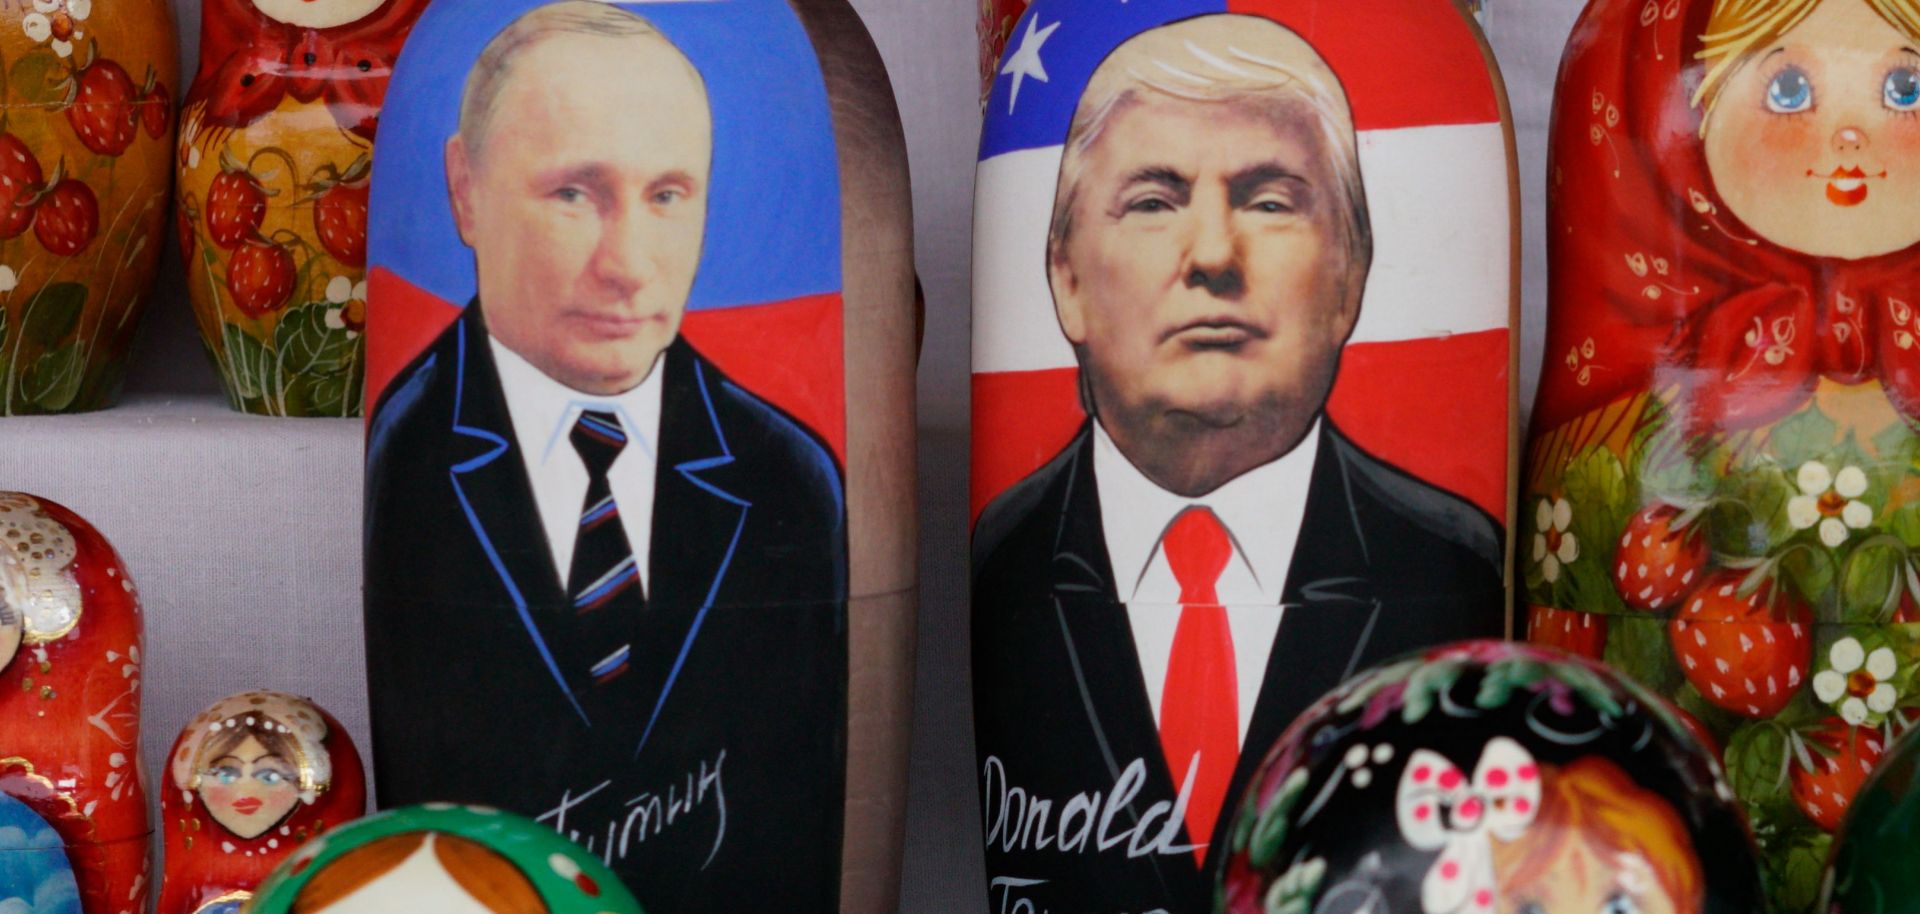 Russian matryoshka, or nesting, dolls depict Russian President Vladimir Putin and U.S. President Donald Trump.